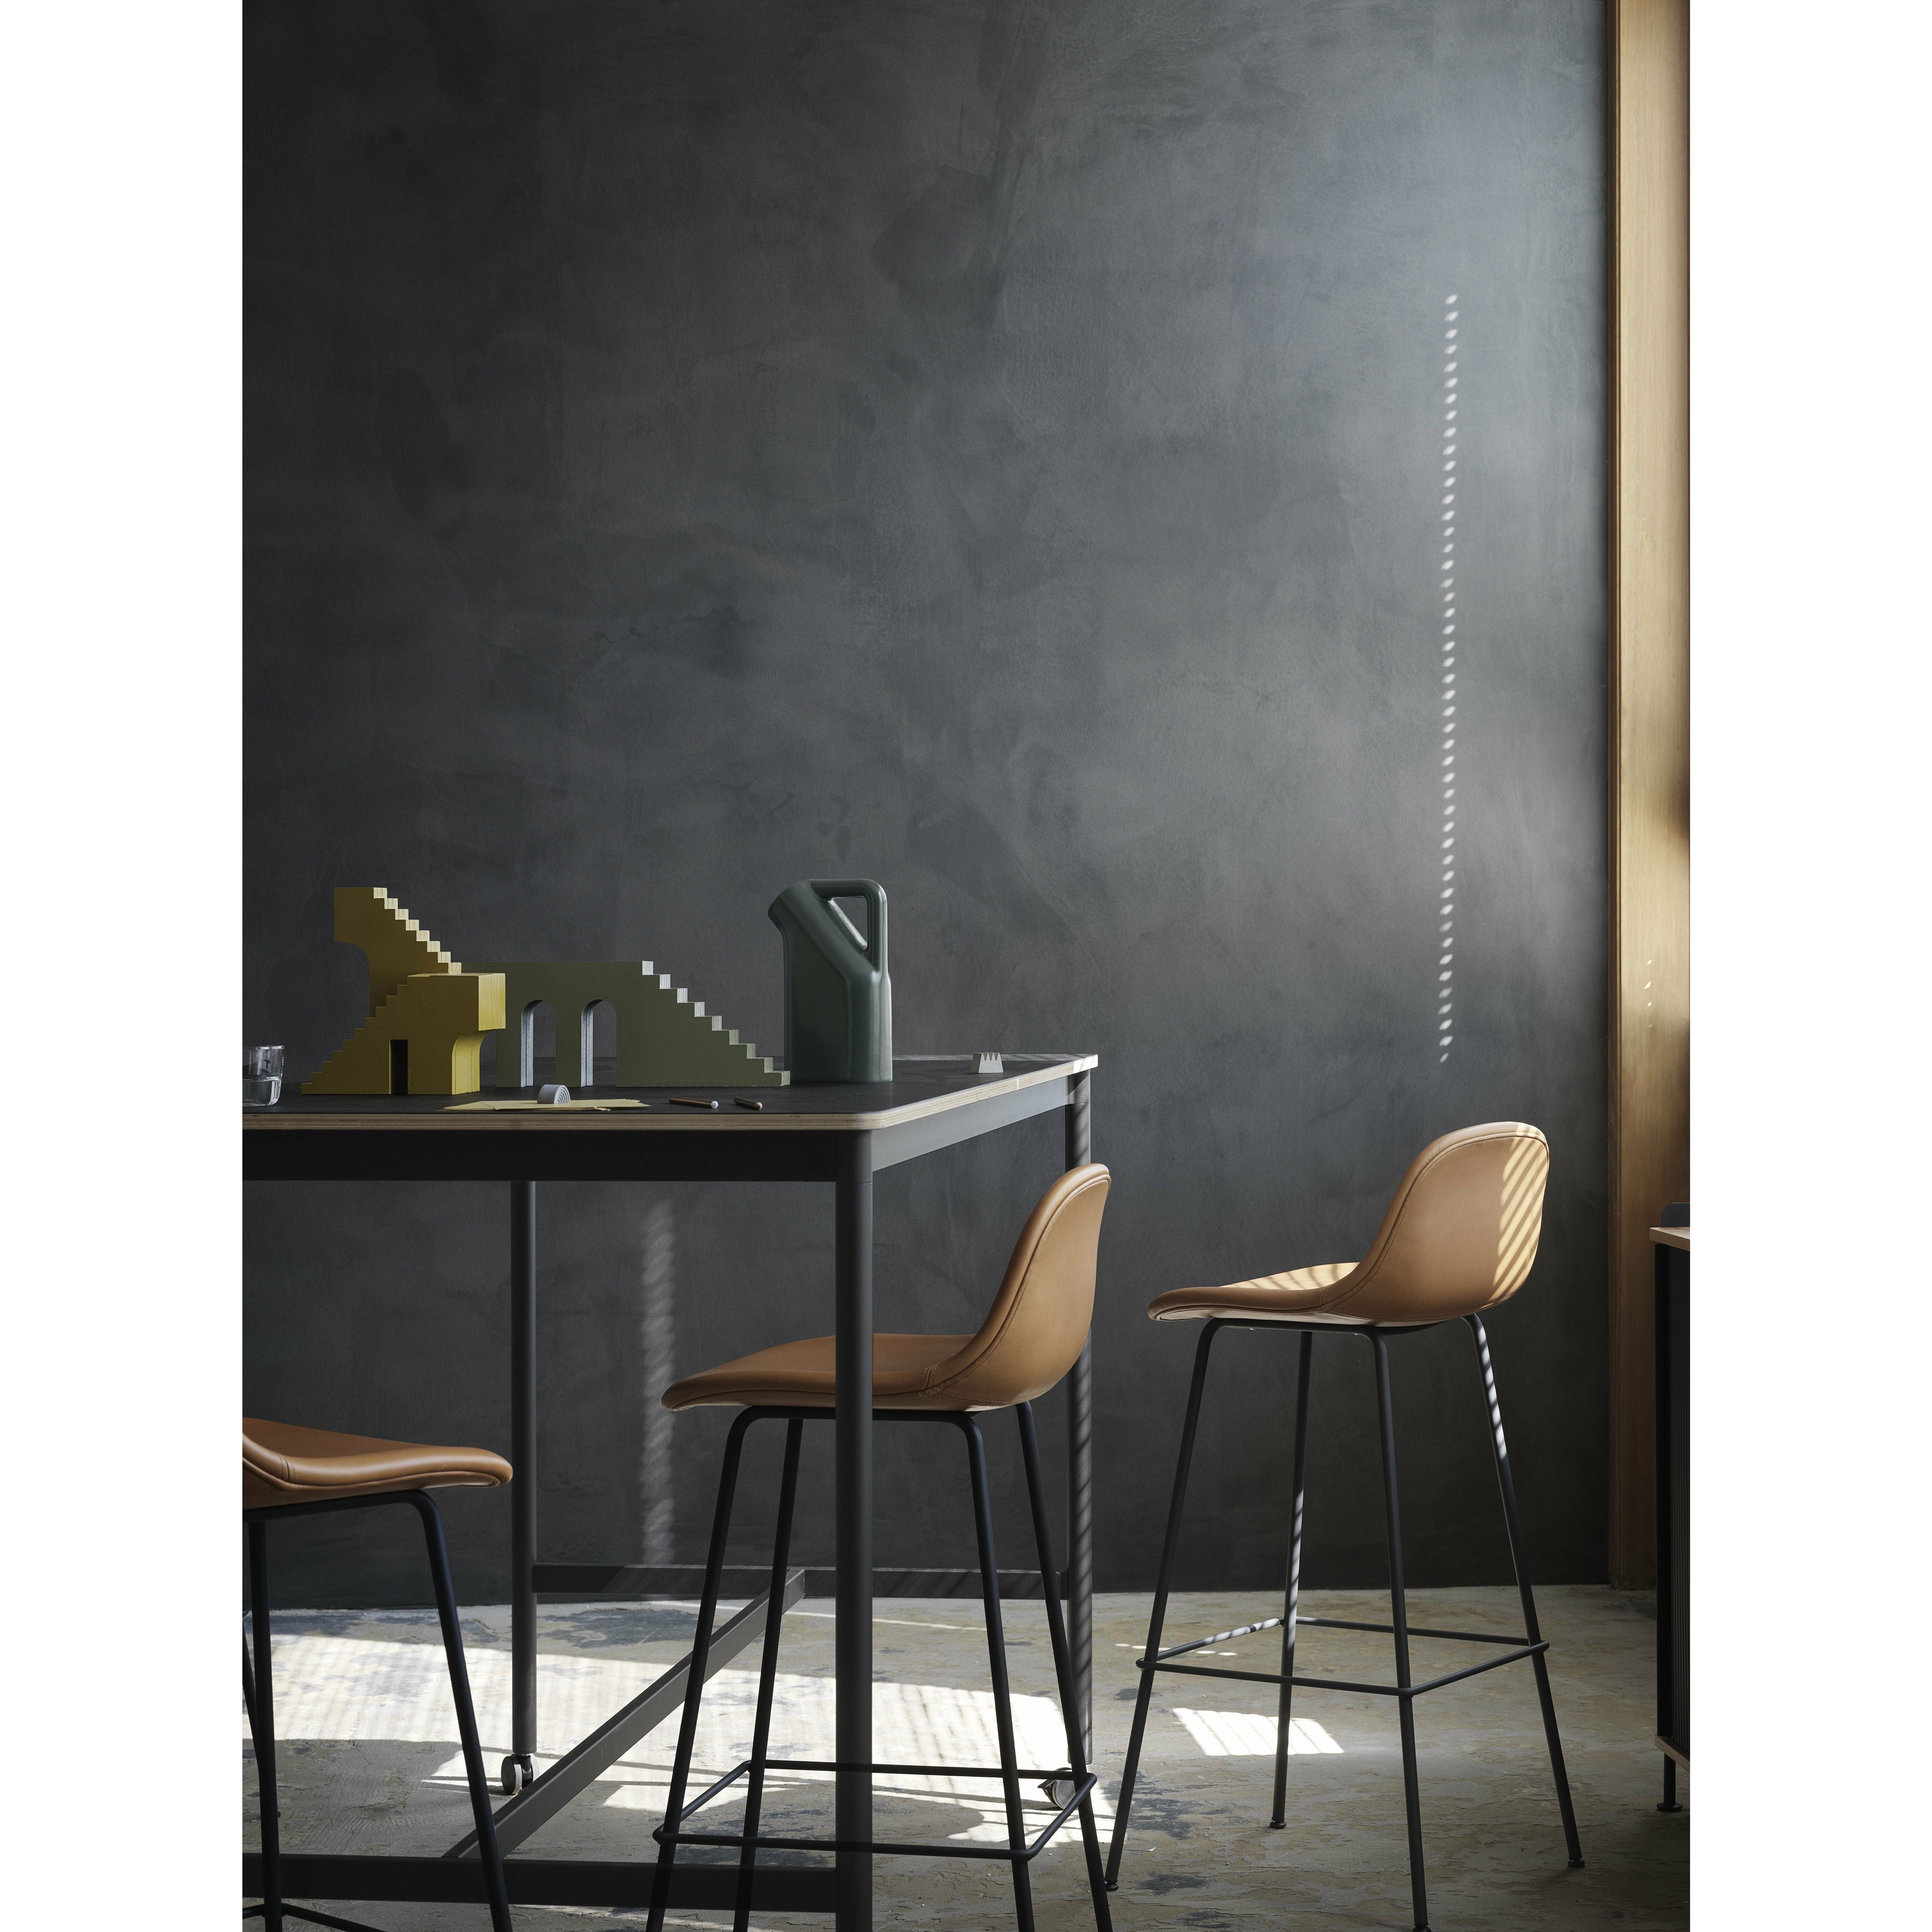 Muuto Base High Table M. Rollos 190x85x105 cm, nanolaminato negro/madera contrachapada negra